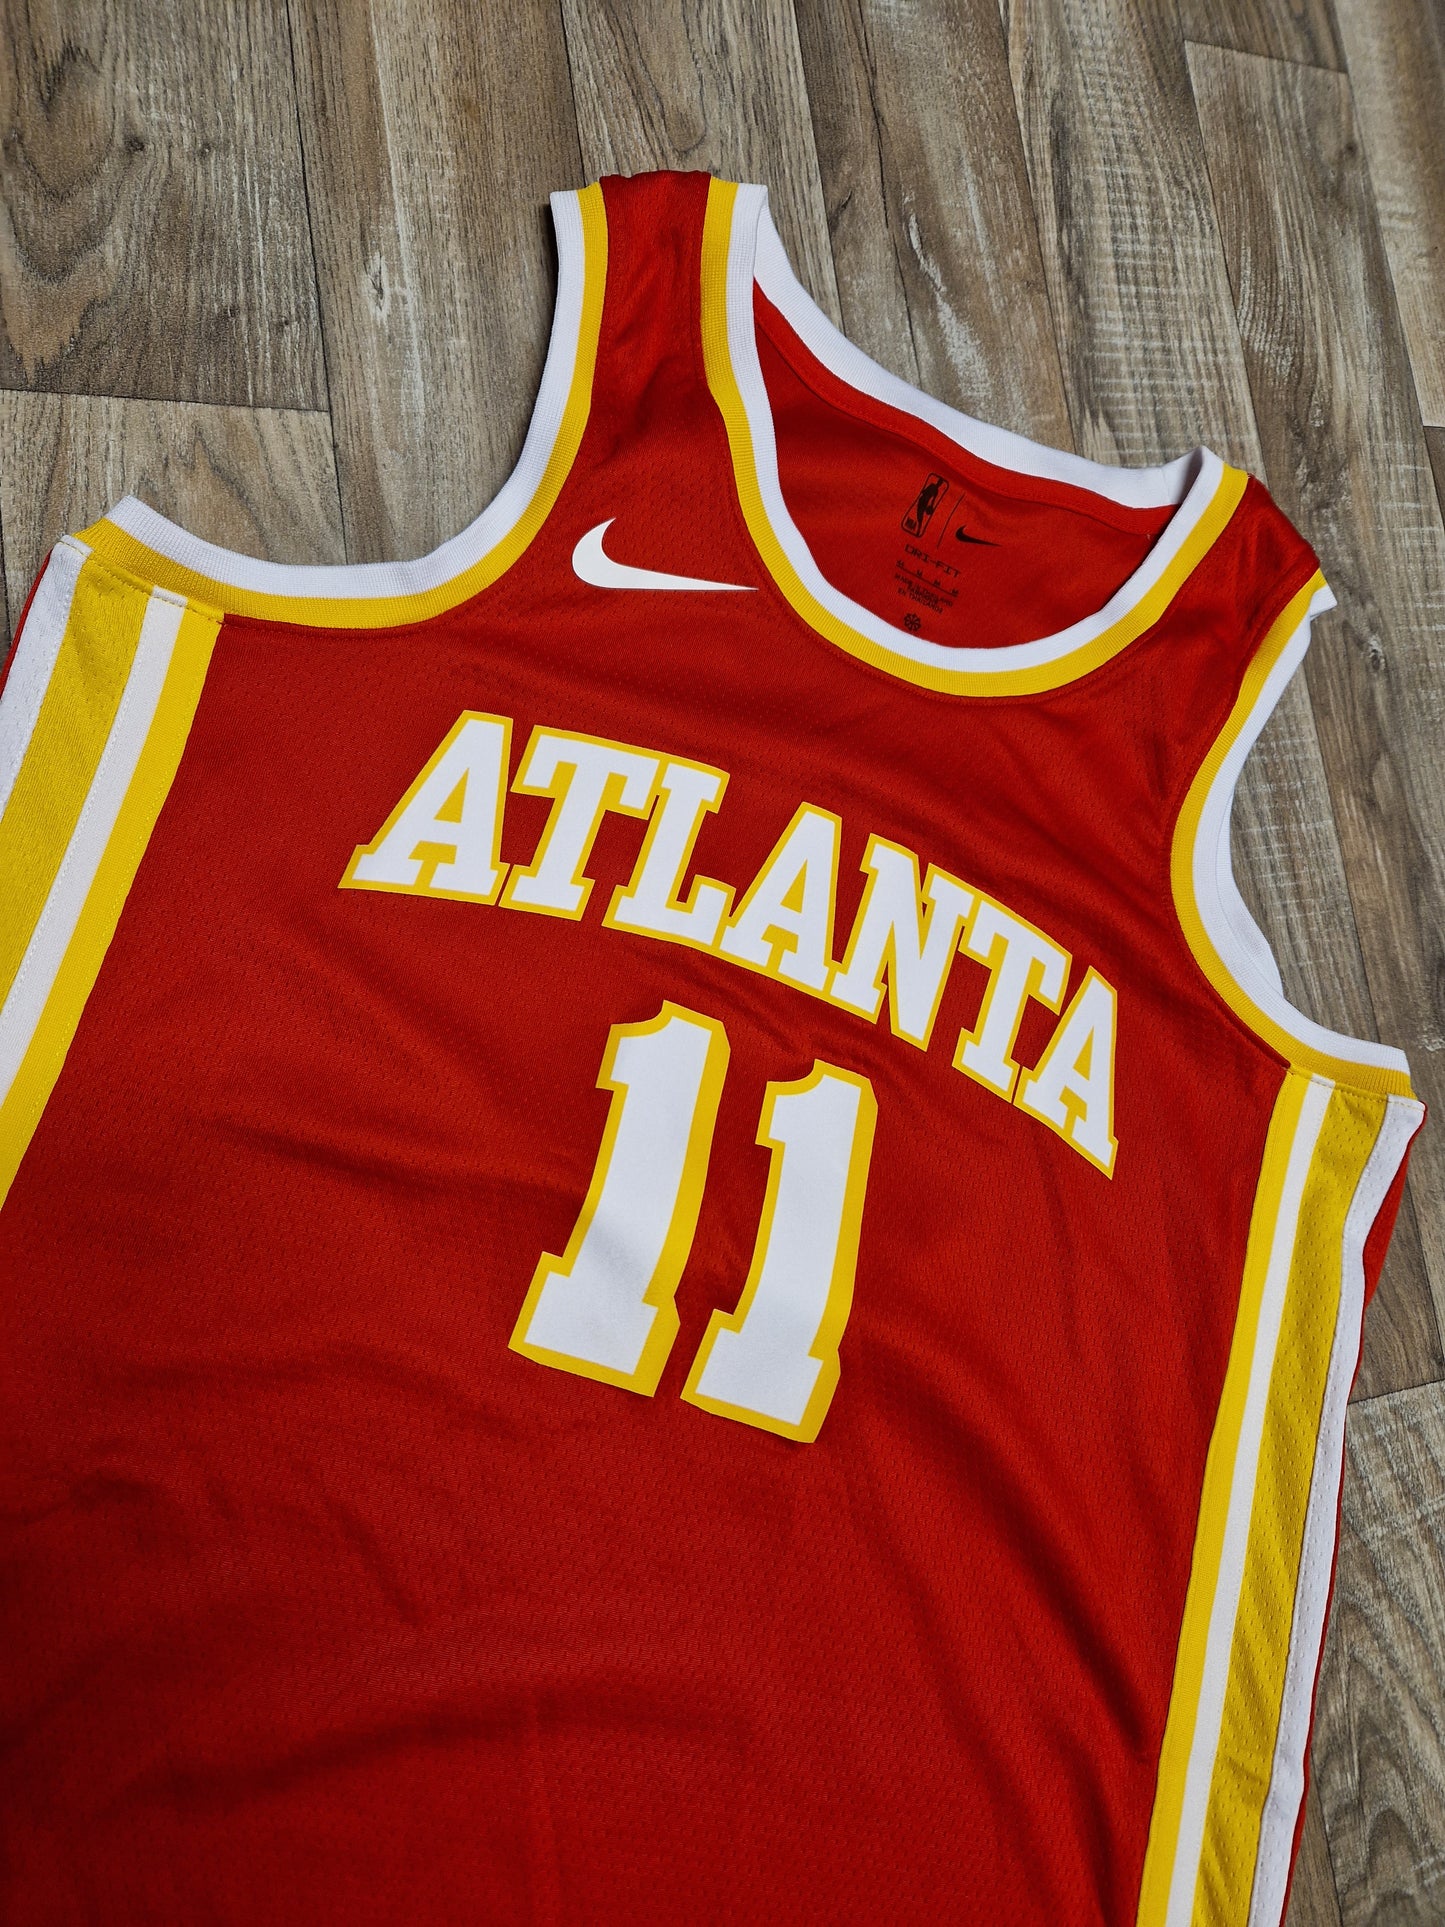 Trae Young Atlanta Hawks Jersey Size Medium